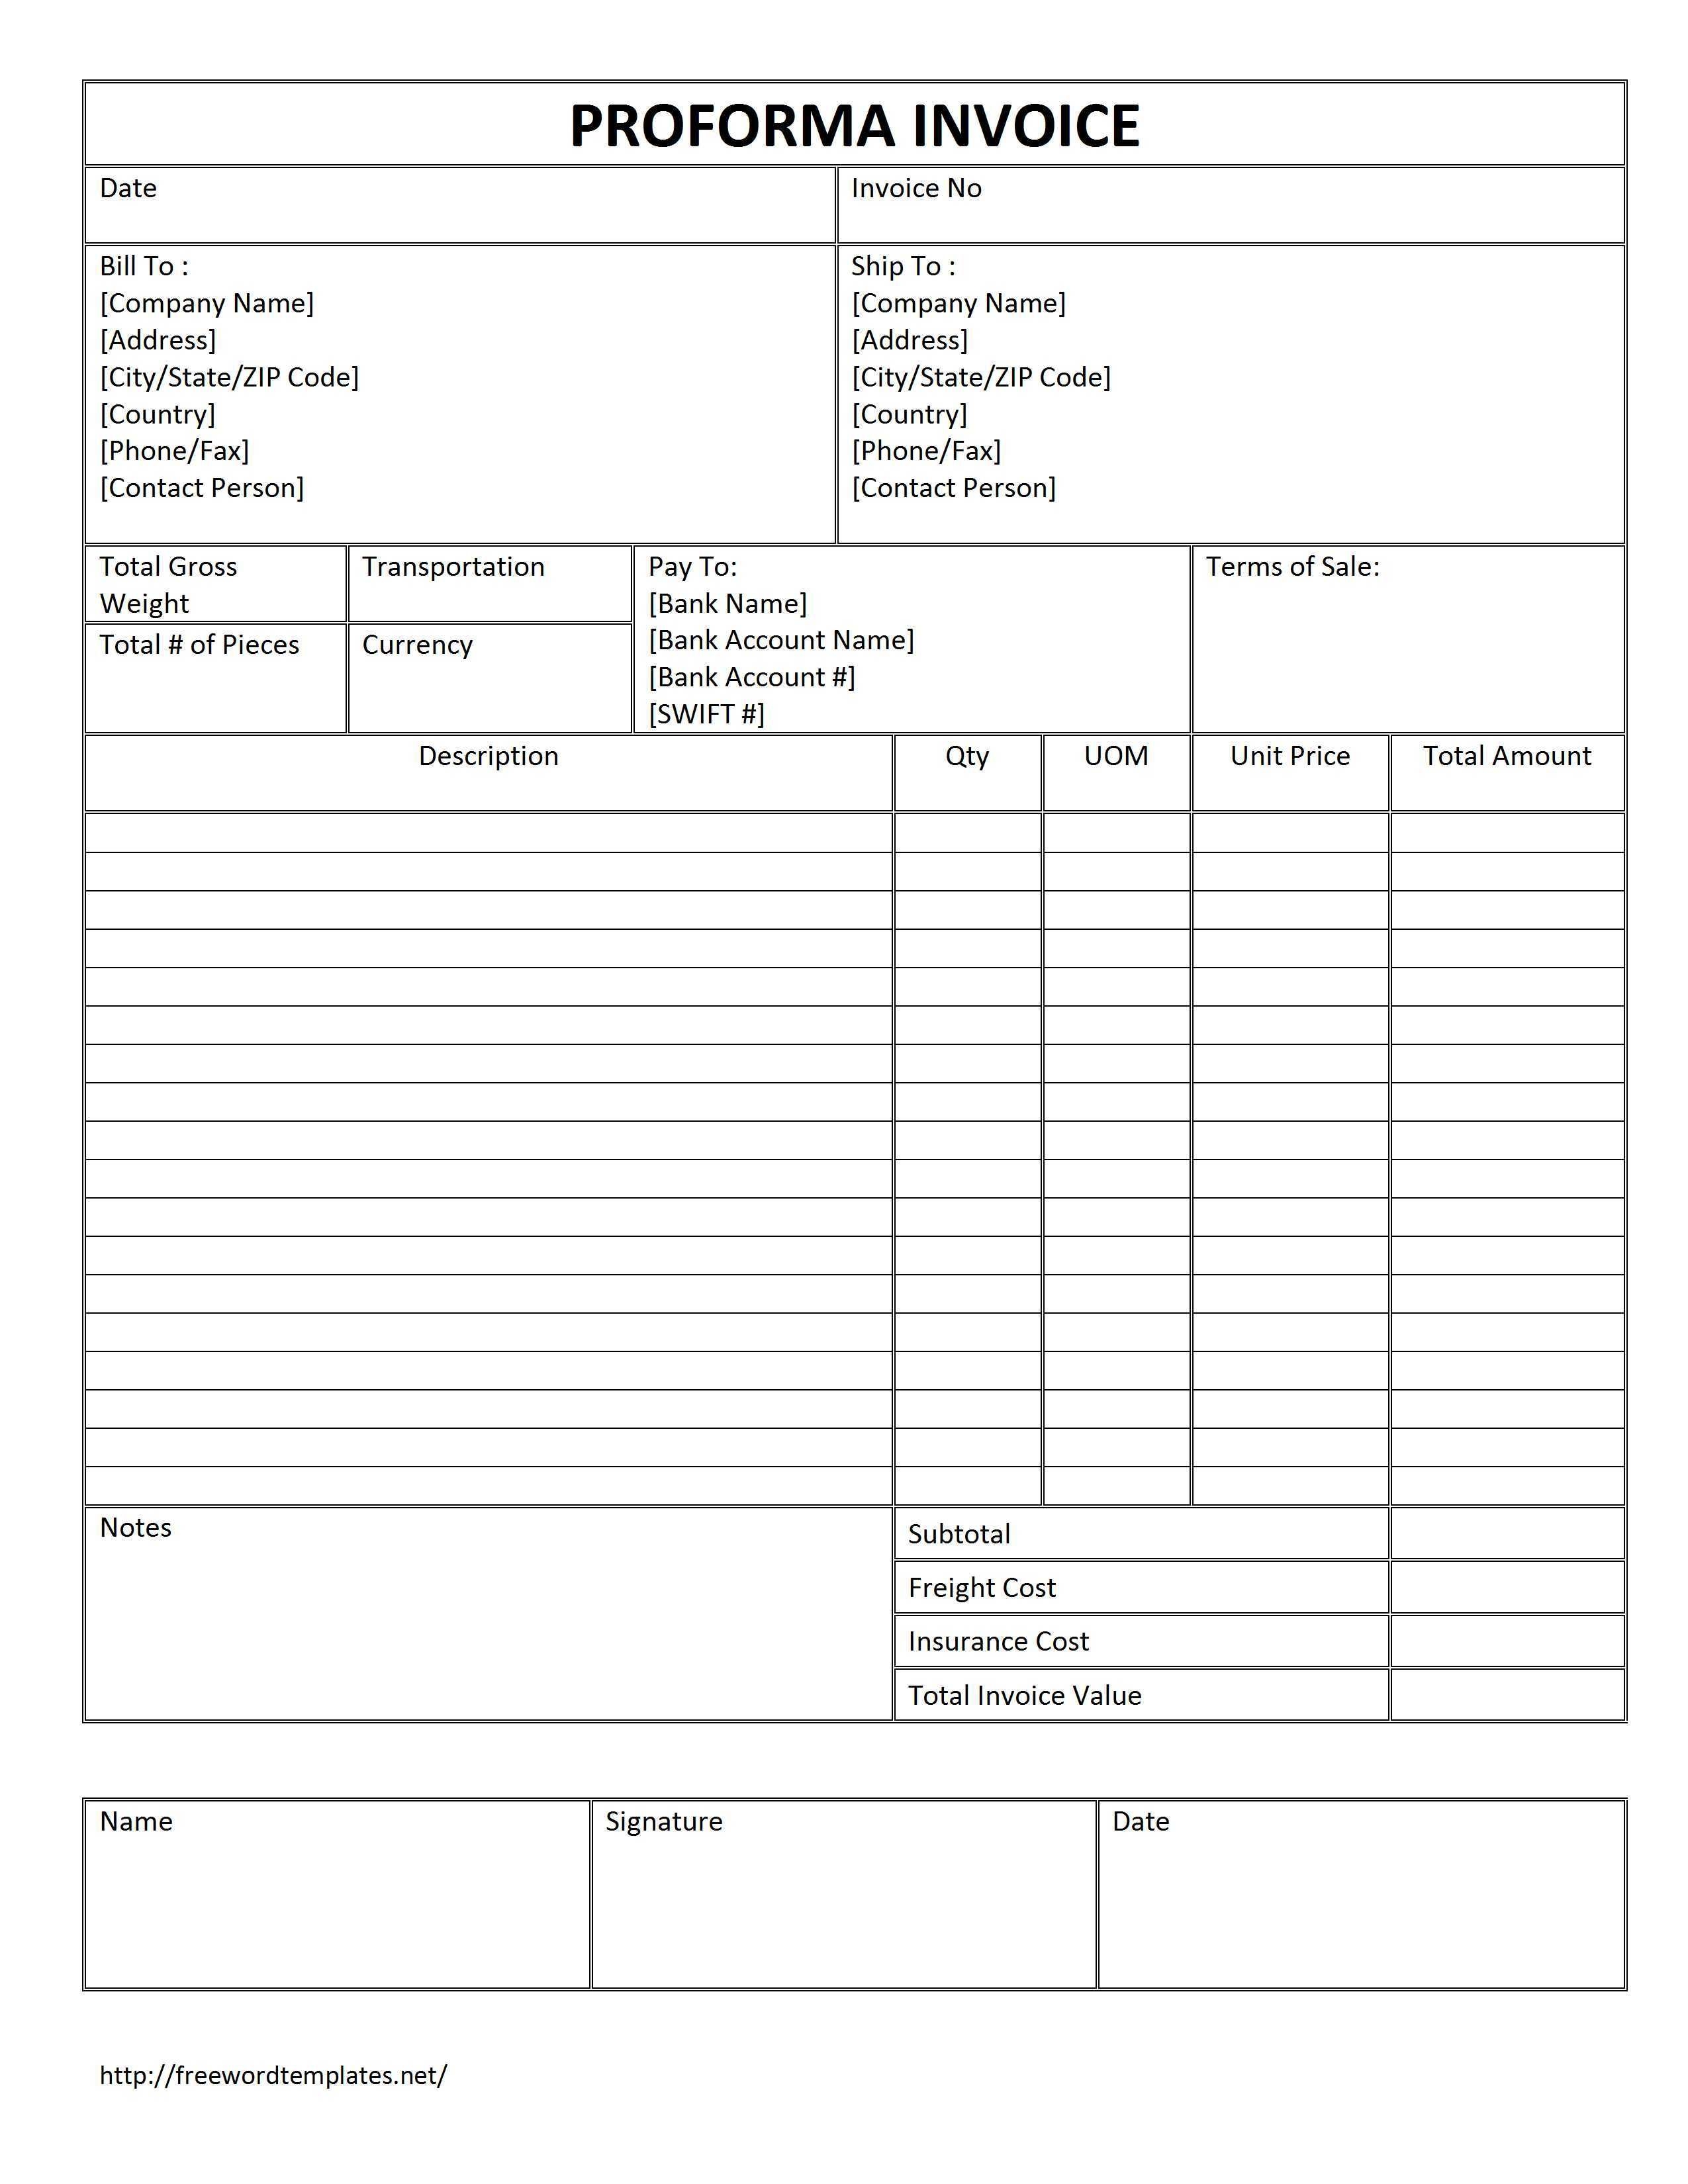 proforma invoice template free download free proforma download form free invoice template